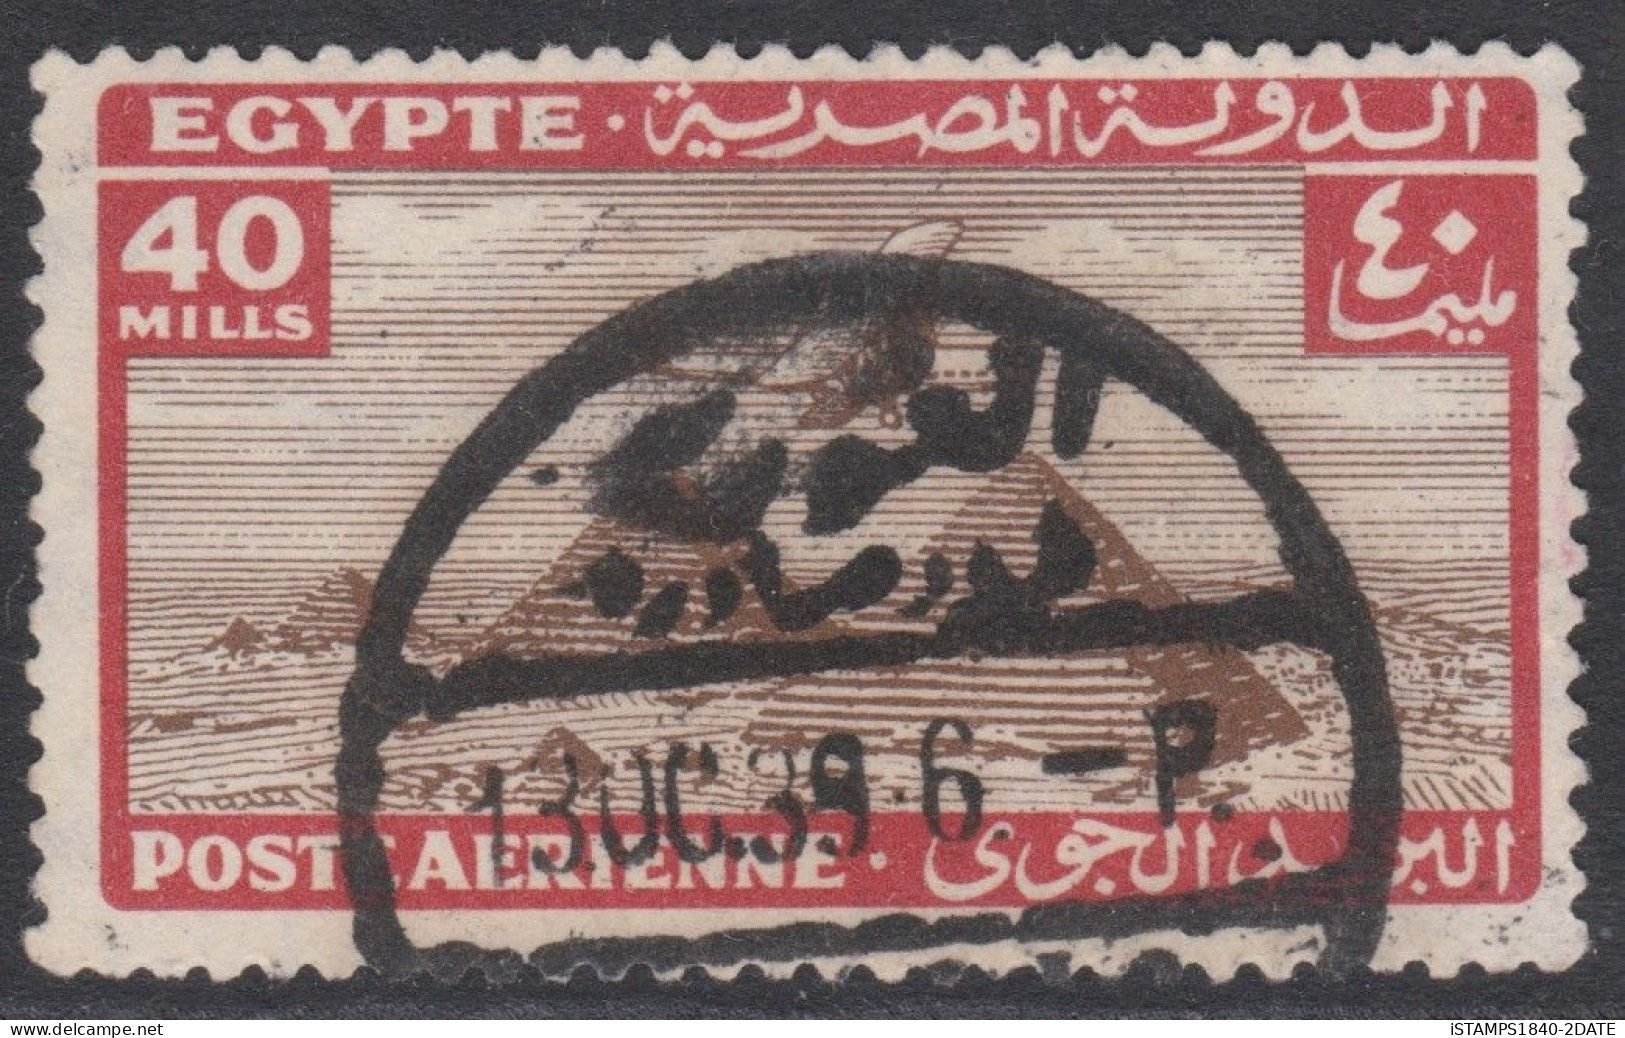 00678/ Egypt 1934/38 Air Mail 40m Used Plane Over Pyramid - Posta Aerea